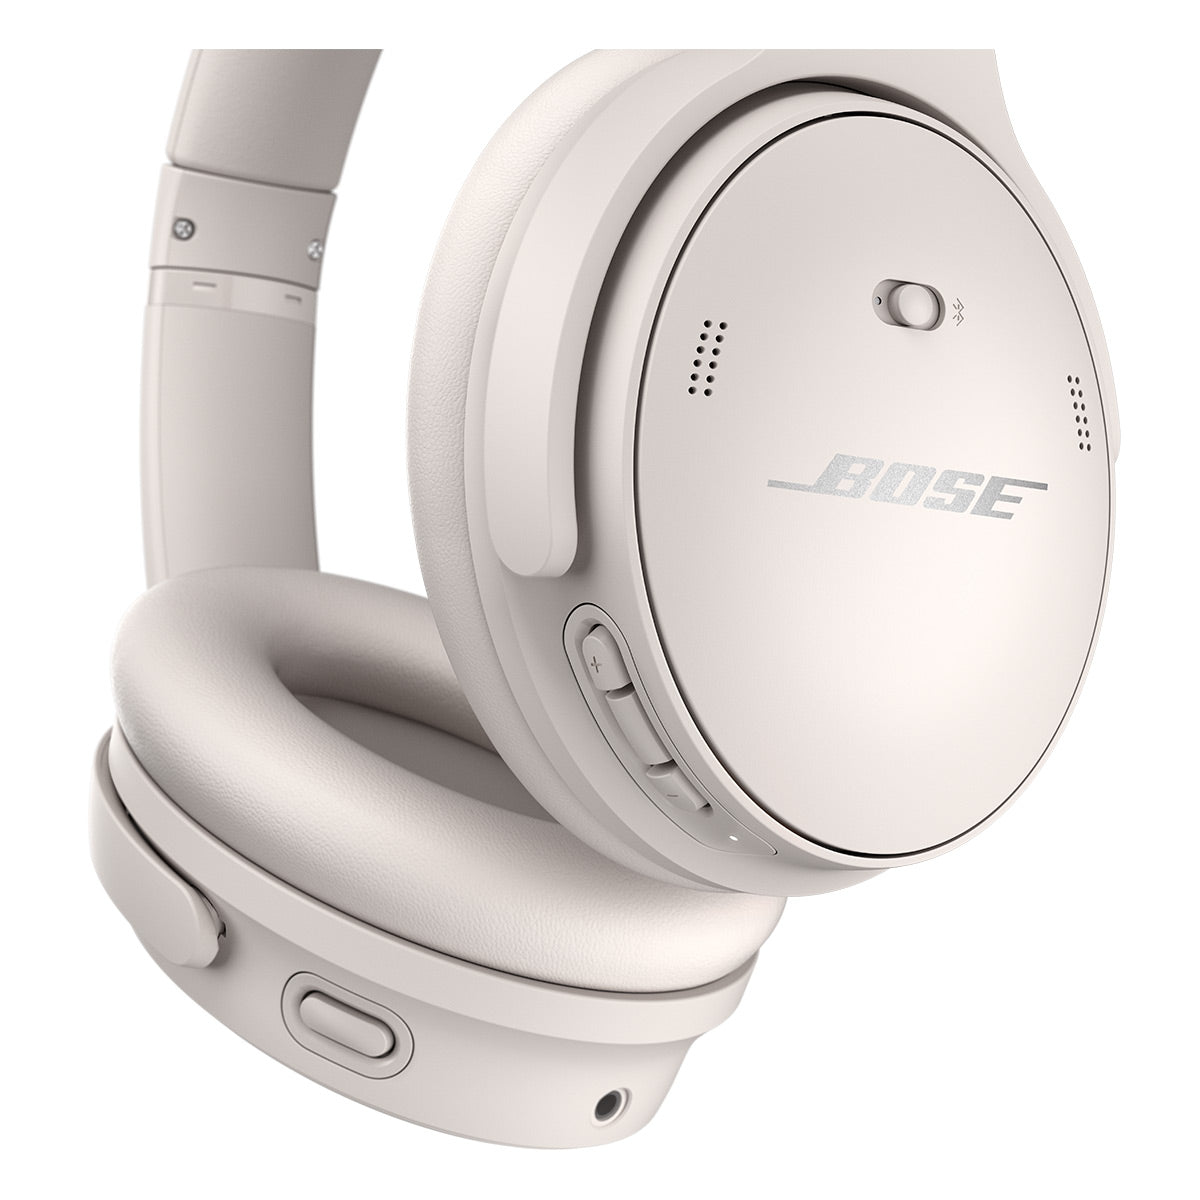 Bose QuietComfort 45 Wireless Noise Canceling Headphones (White) and Bose SoundLink Flex Bluetooth Portable Speaker (White Smoke)